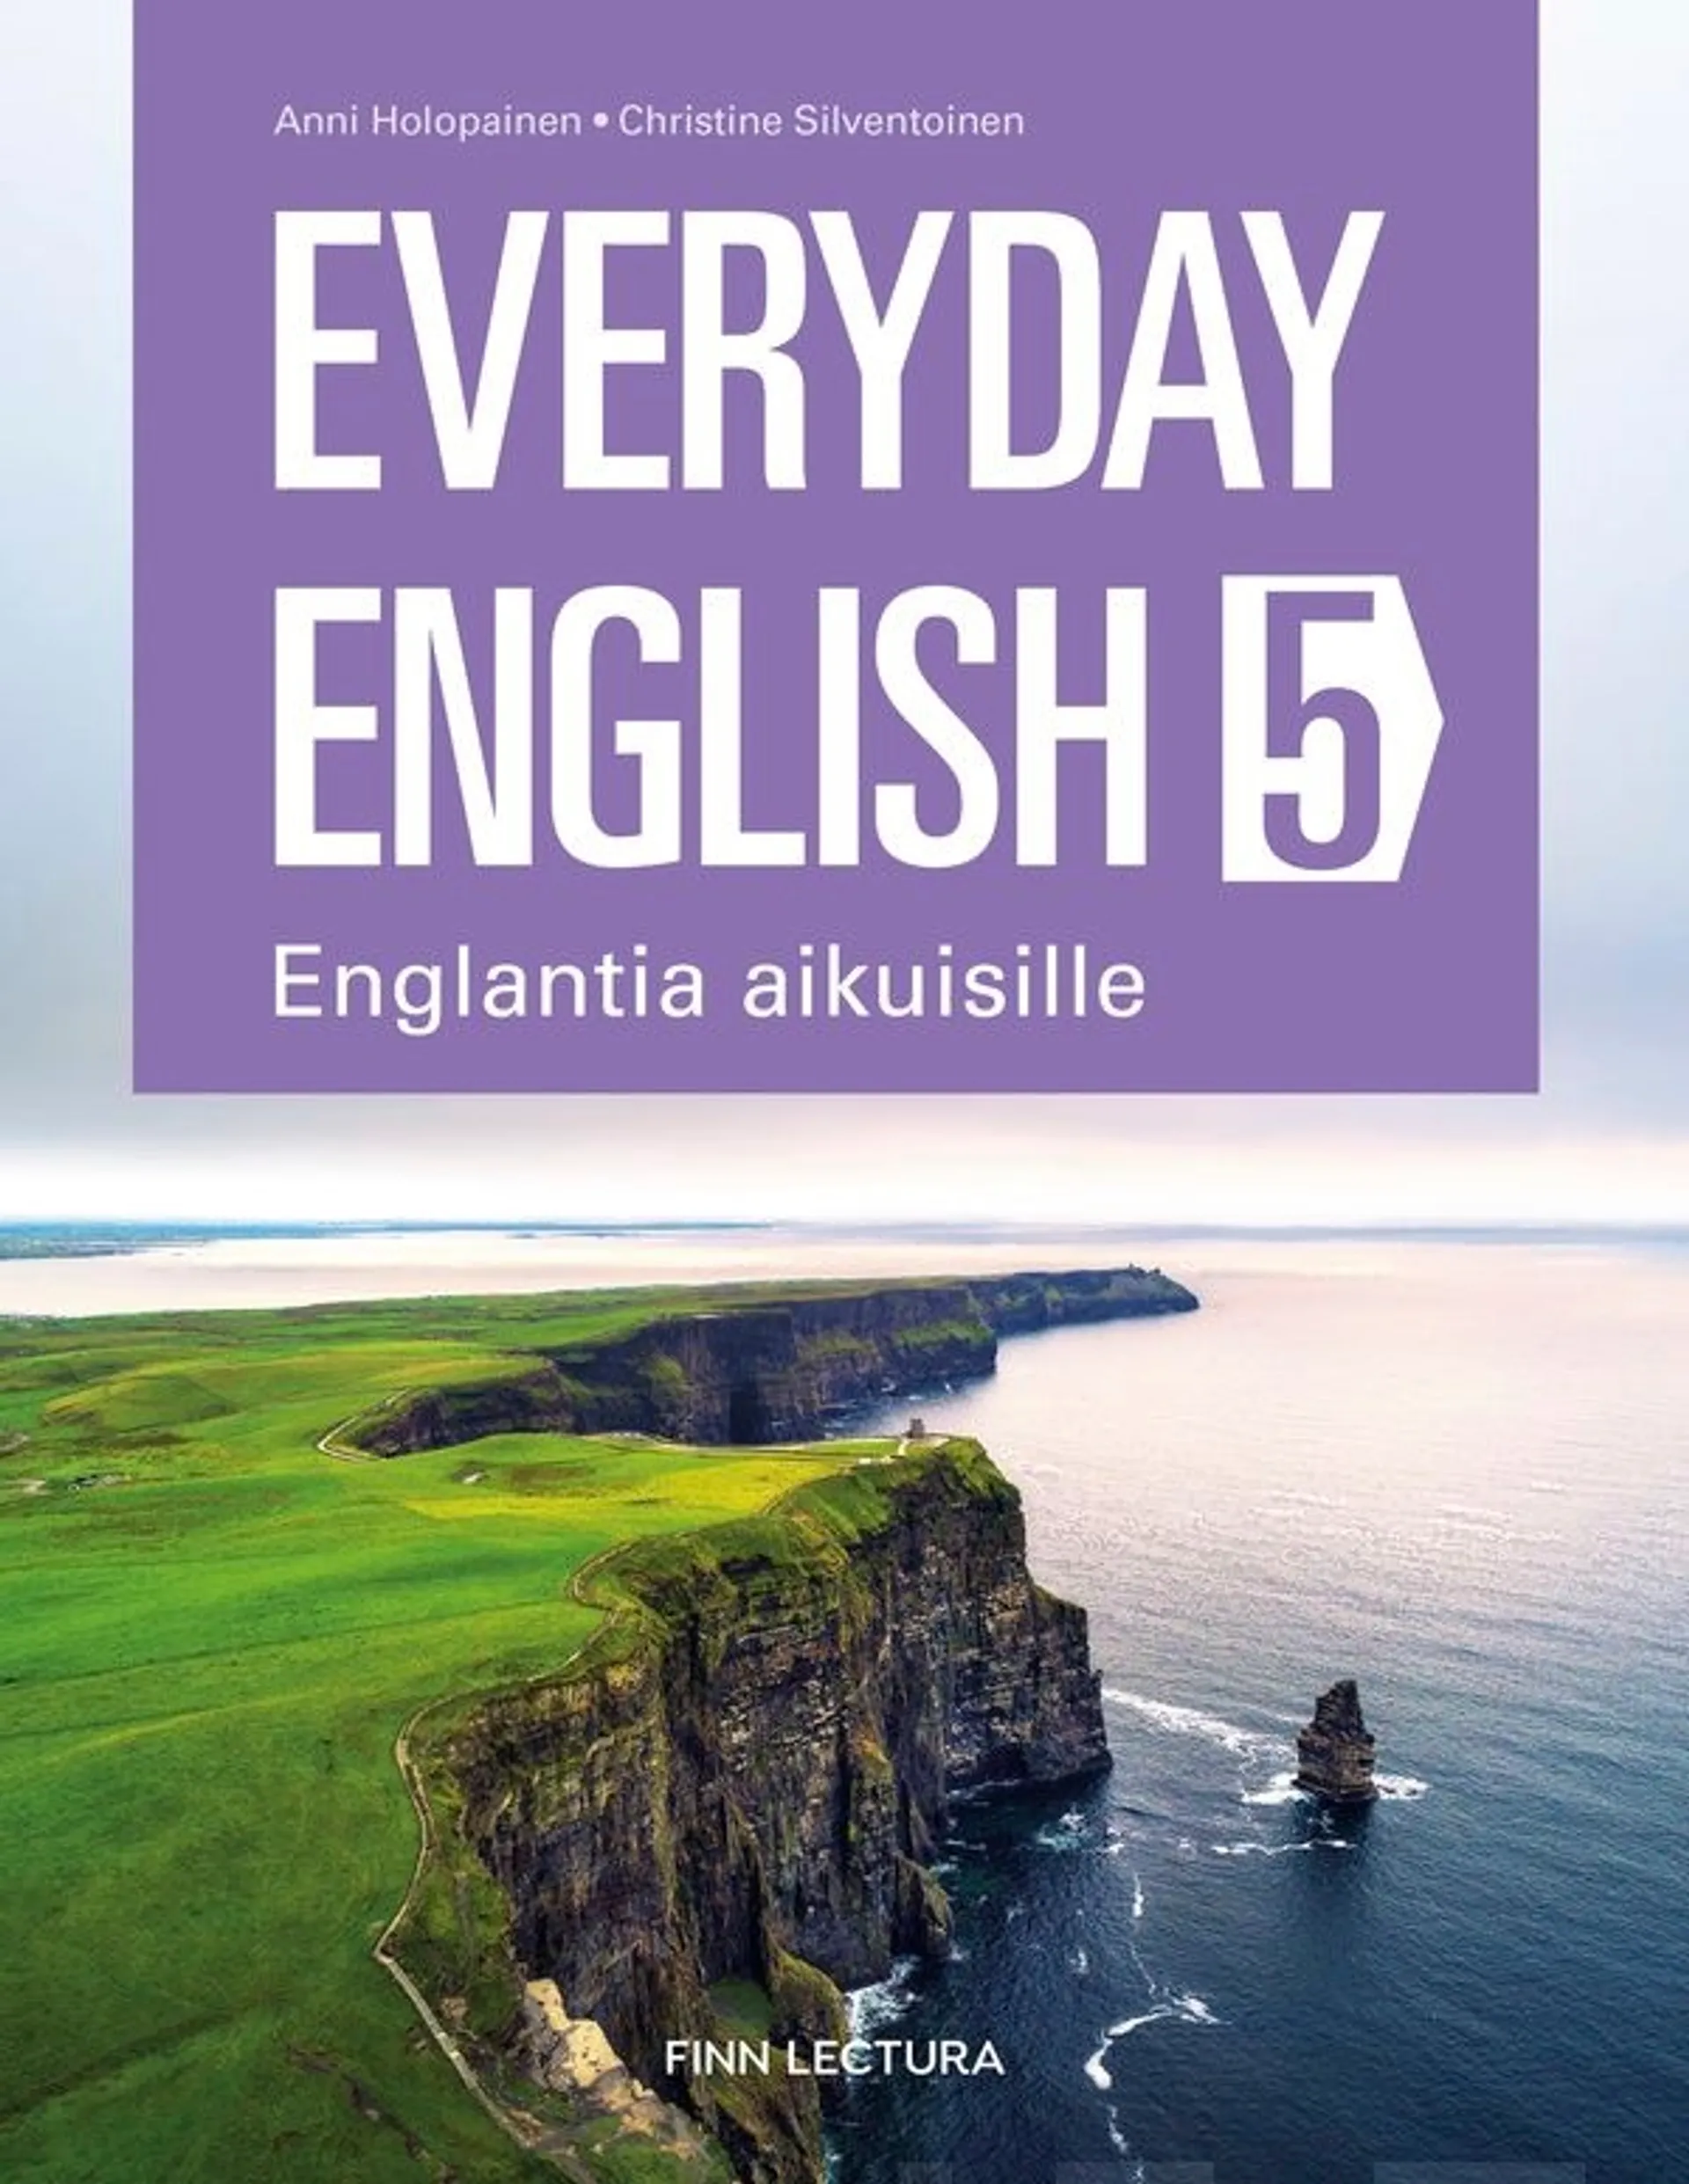 Holopainen, Everyday English 5 - Englantia aikuisille